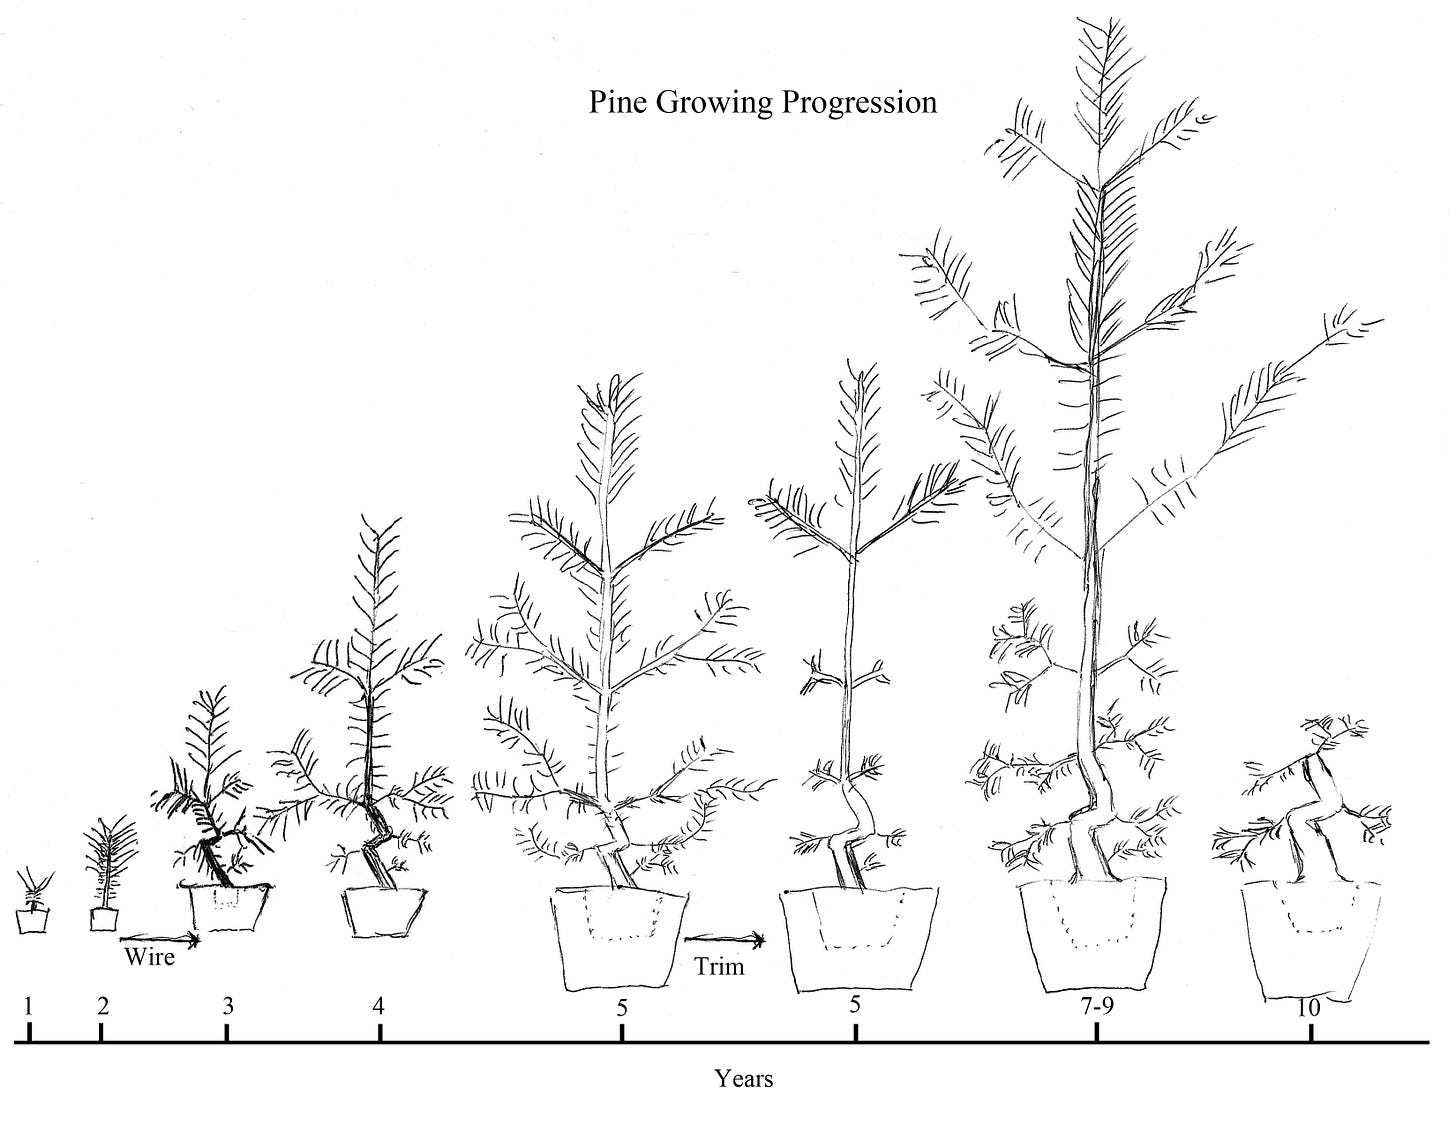 ID: Pine bonsai growth progression illustration, covering the first 10 years of bonsai development